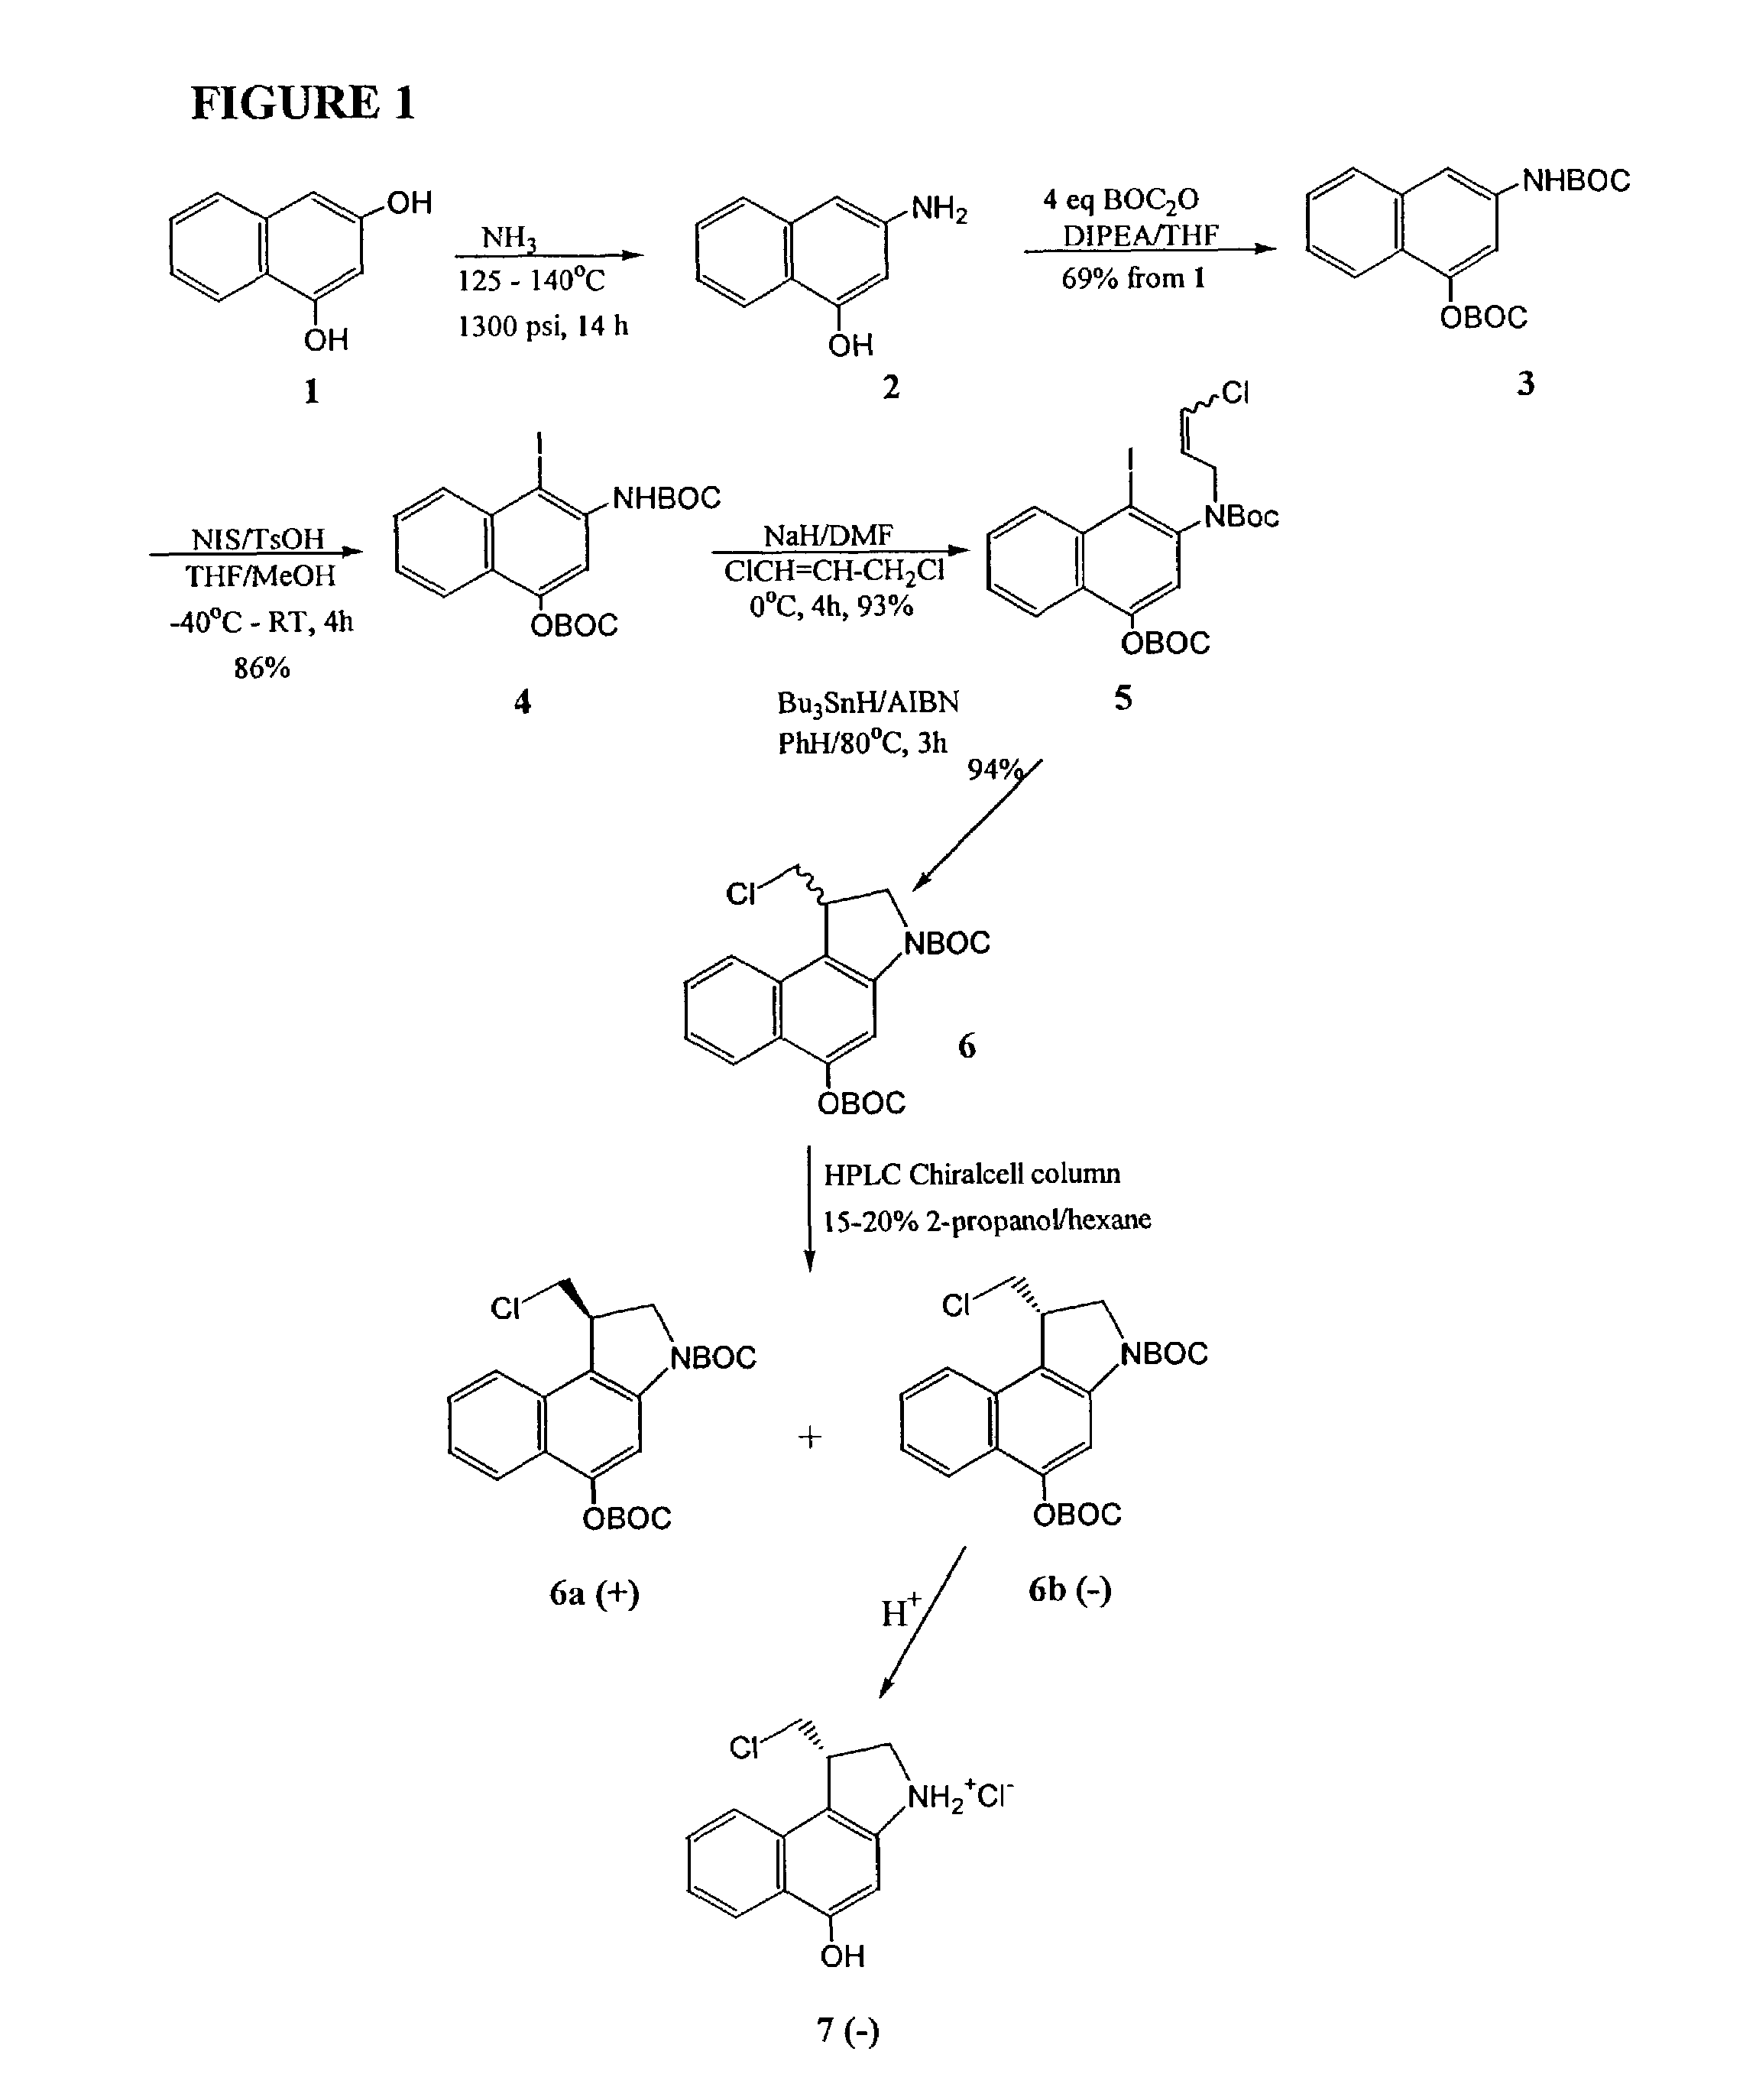 CC-1065 analog synthesis